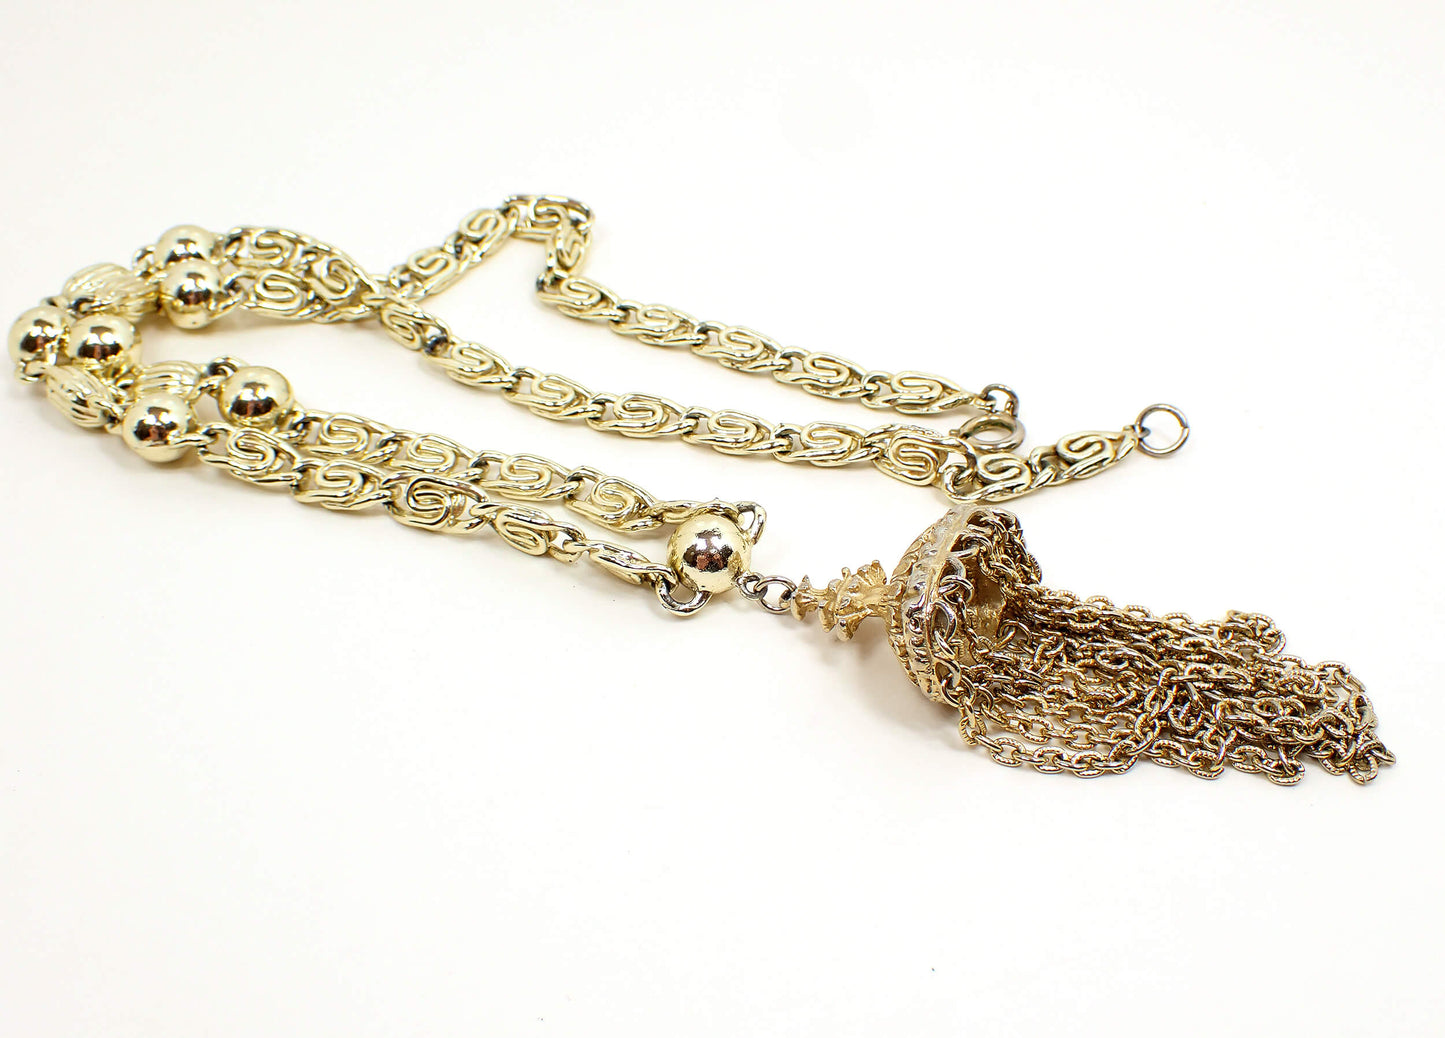 Large Exquisite Vintage Tassel Necklace